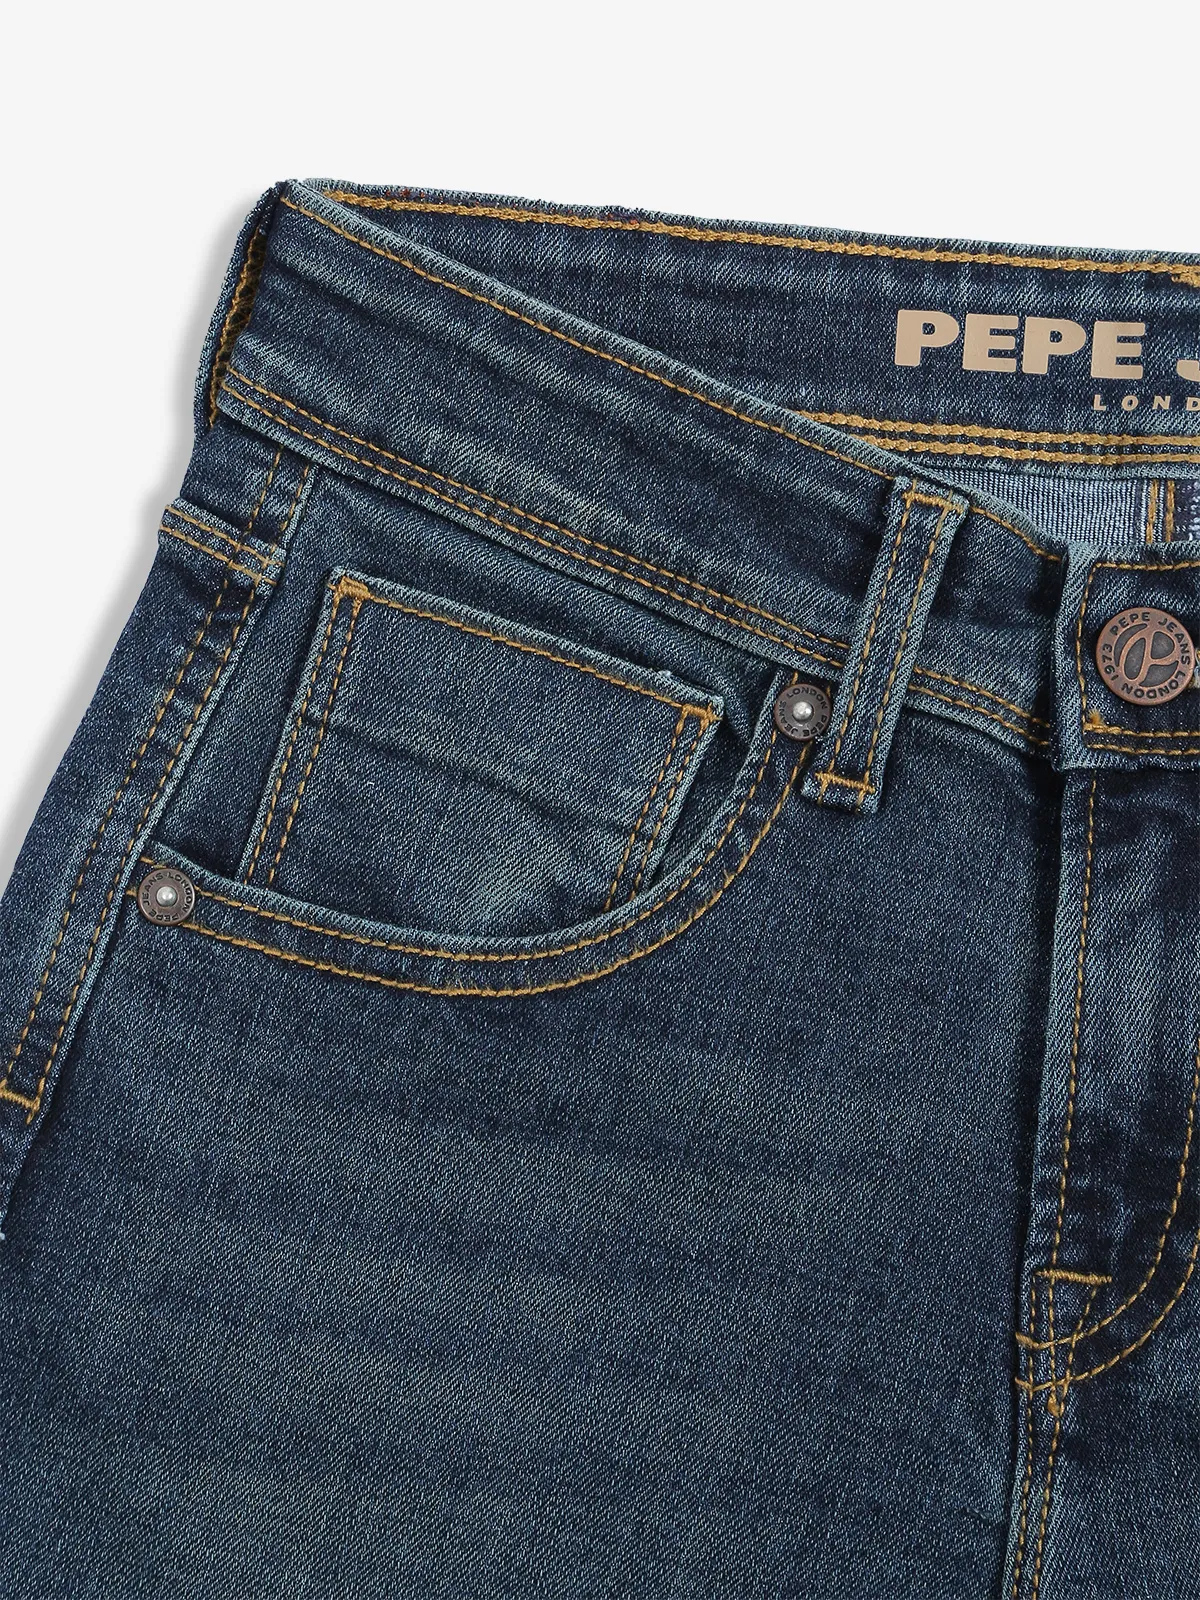 PEPE JEANS denim washed dark blue jeans